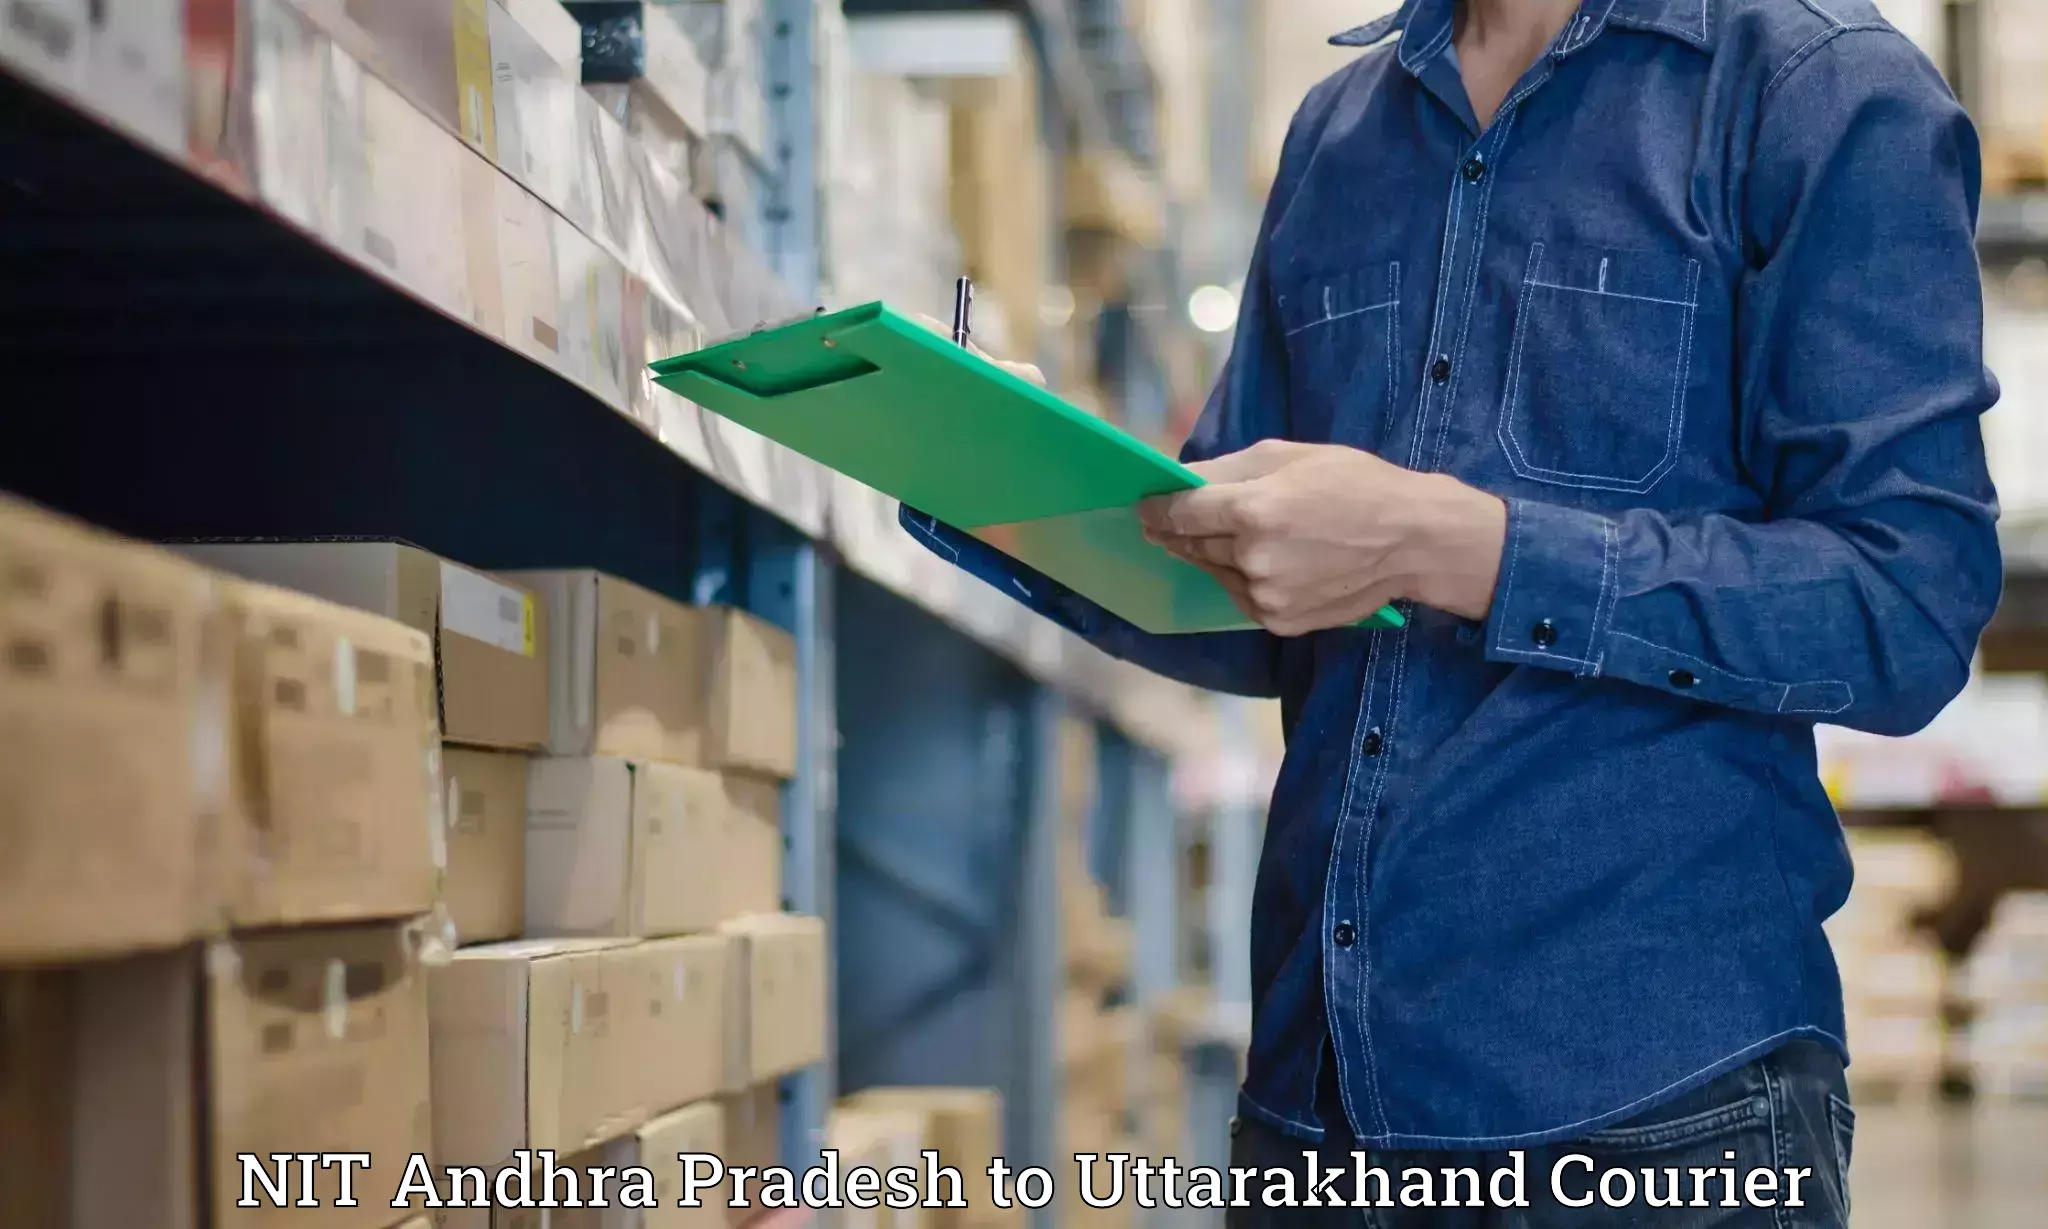 24/7 courier service NIT Andhra Pradesh to Dehradun